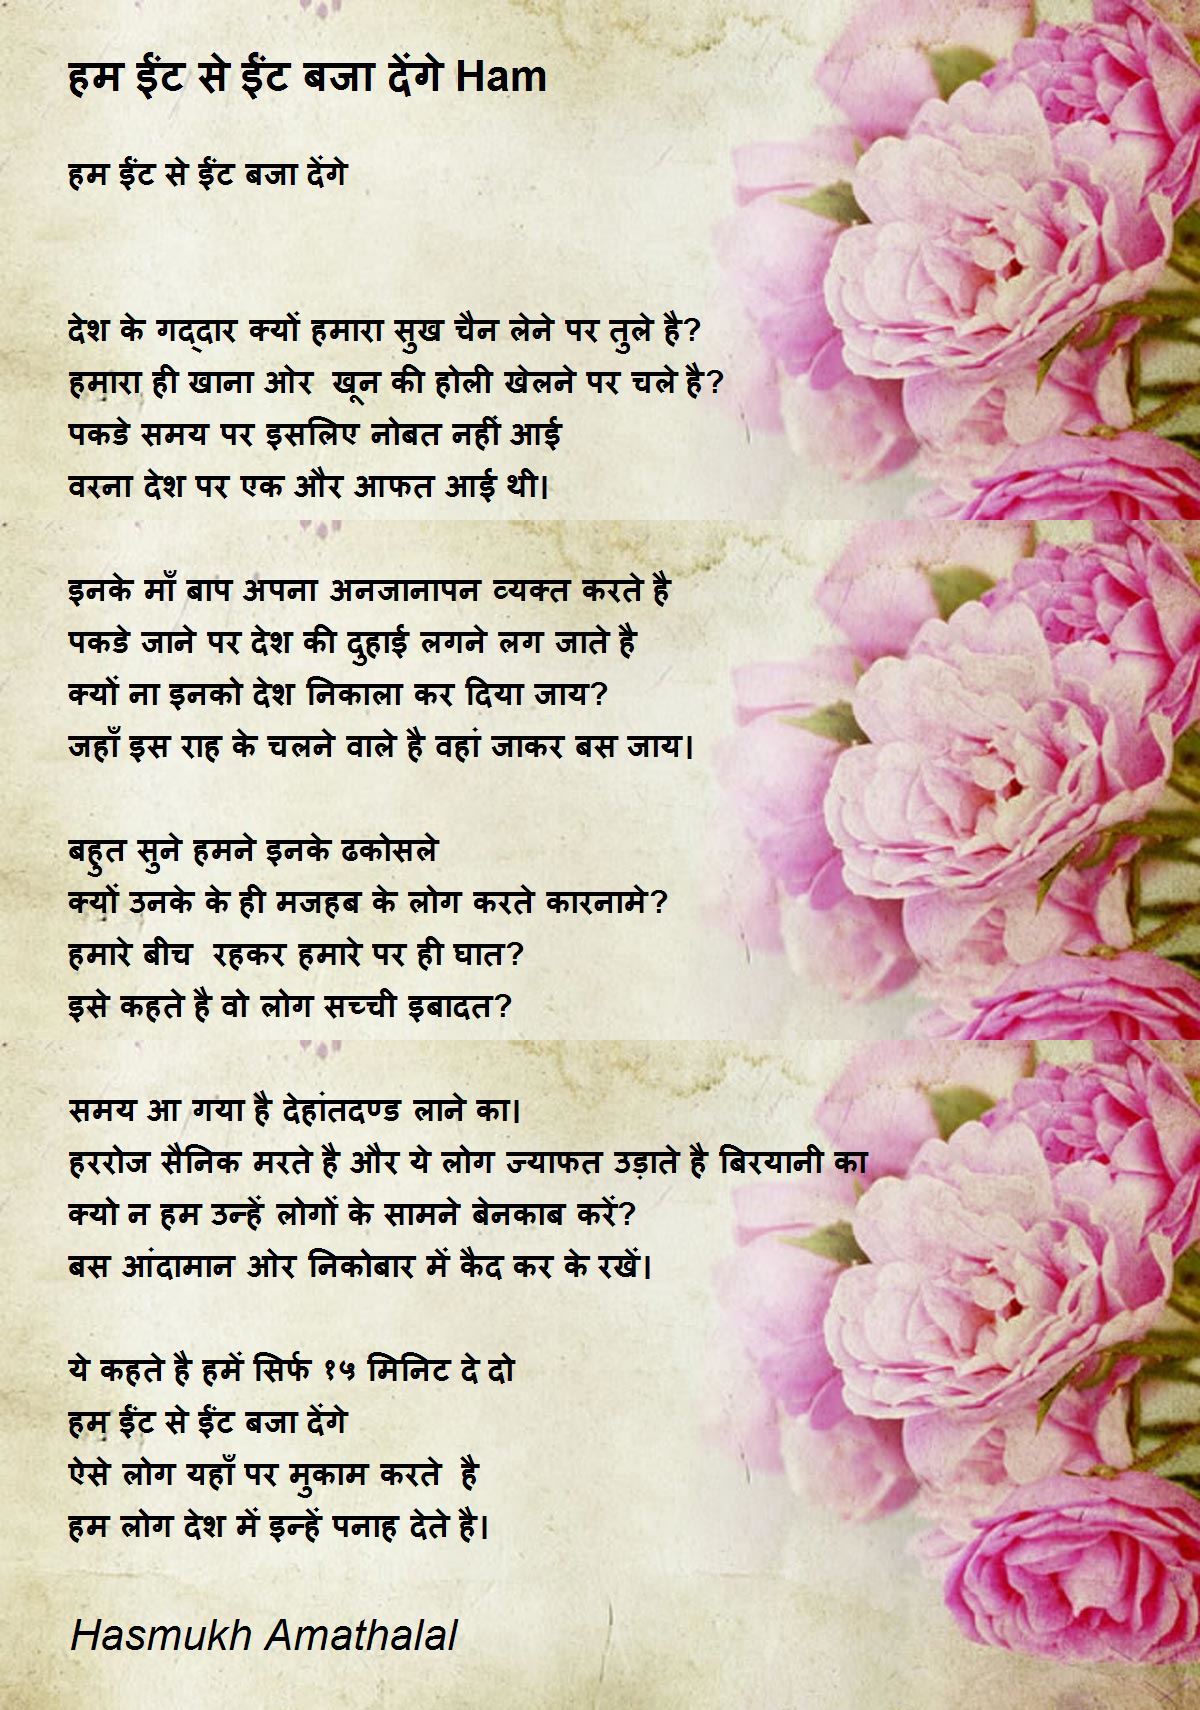 hamatreya poem essay